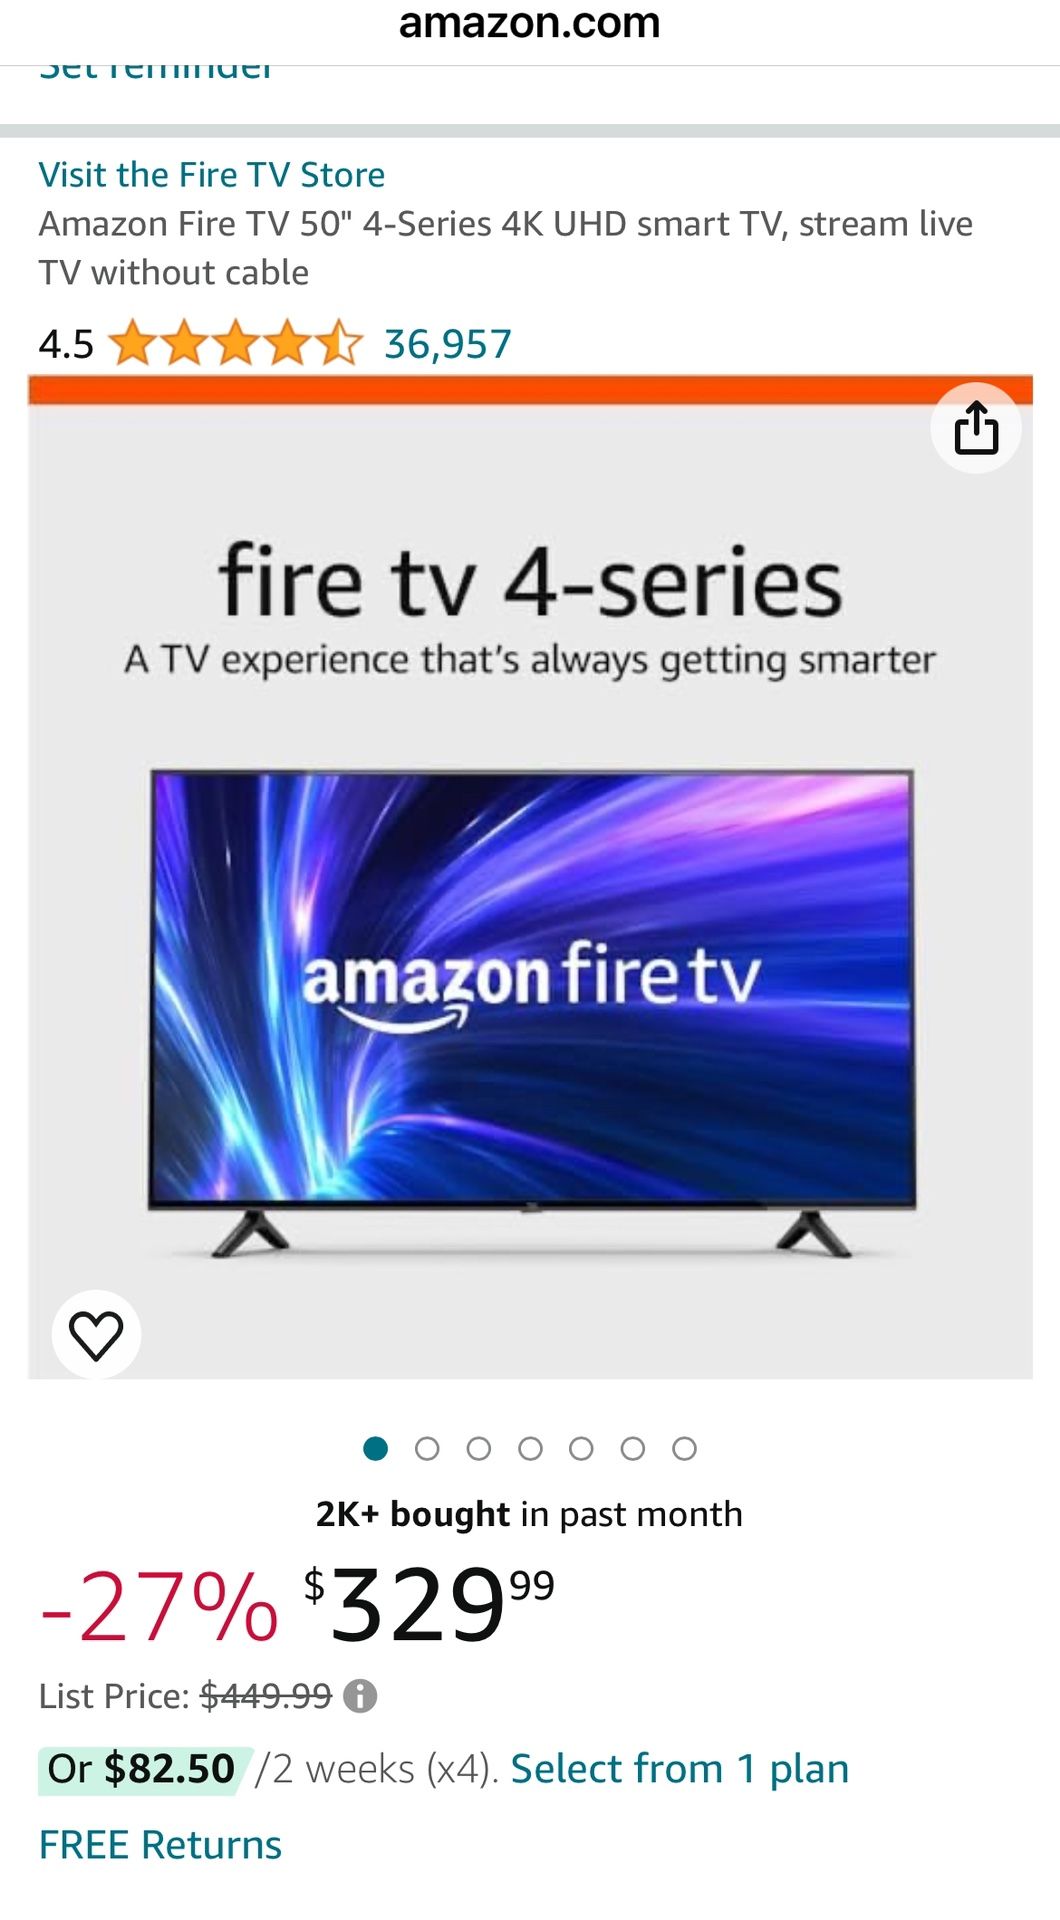 Amazon Fire TV 50”